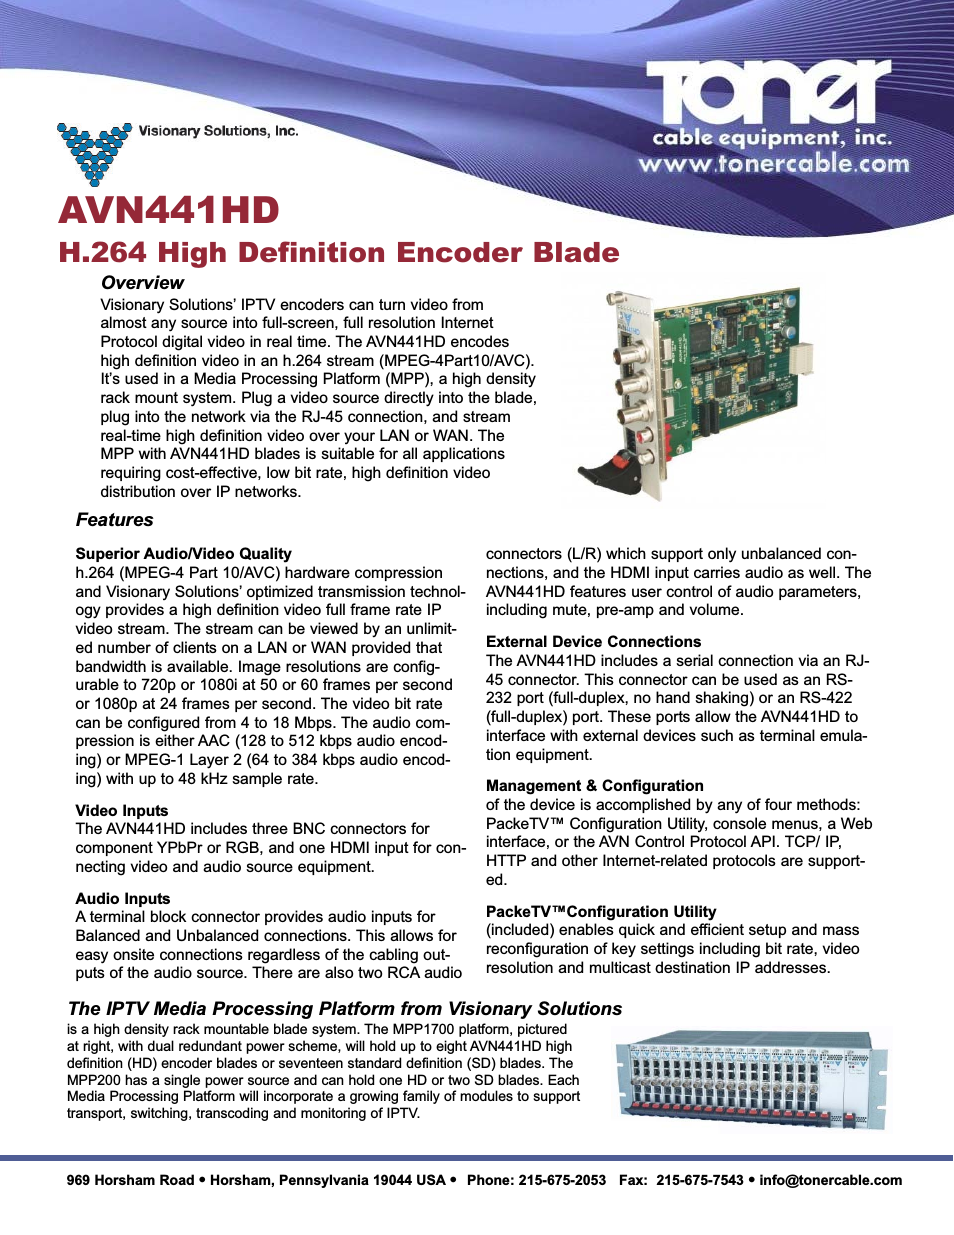 AVN441HD H.264 High Definition Encoder Blade